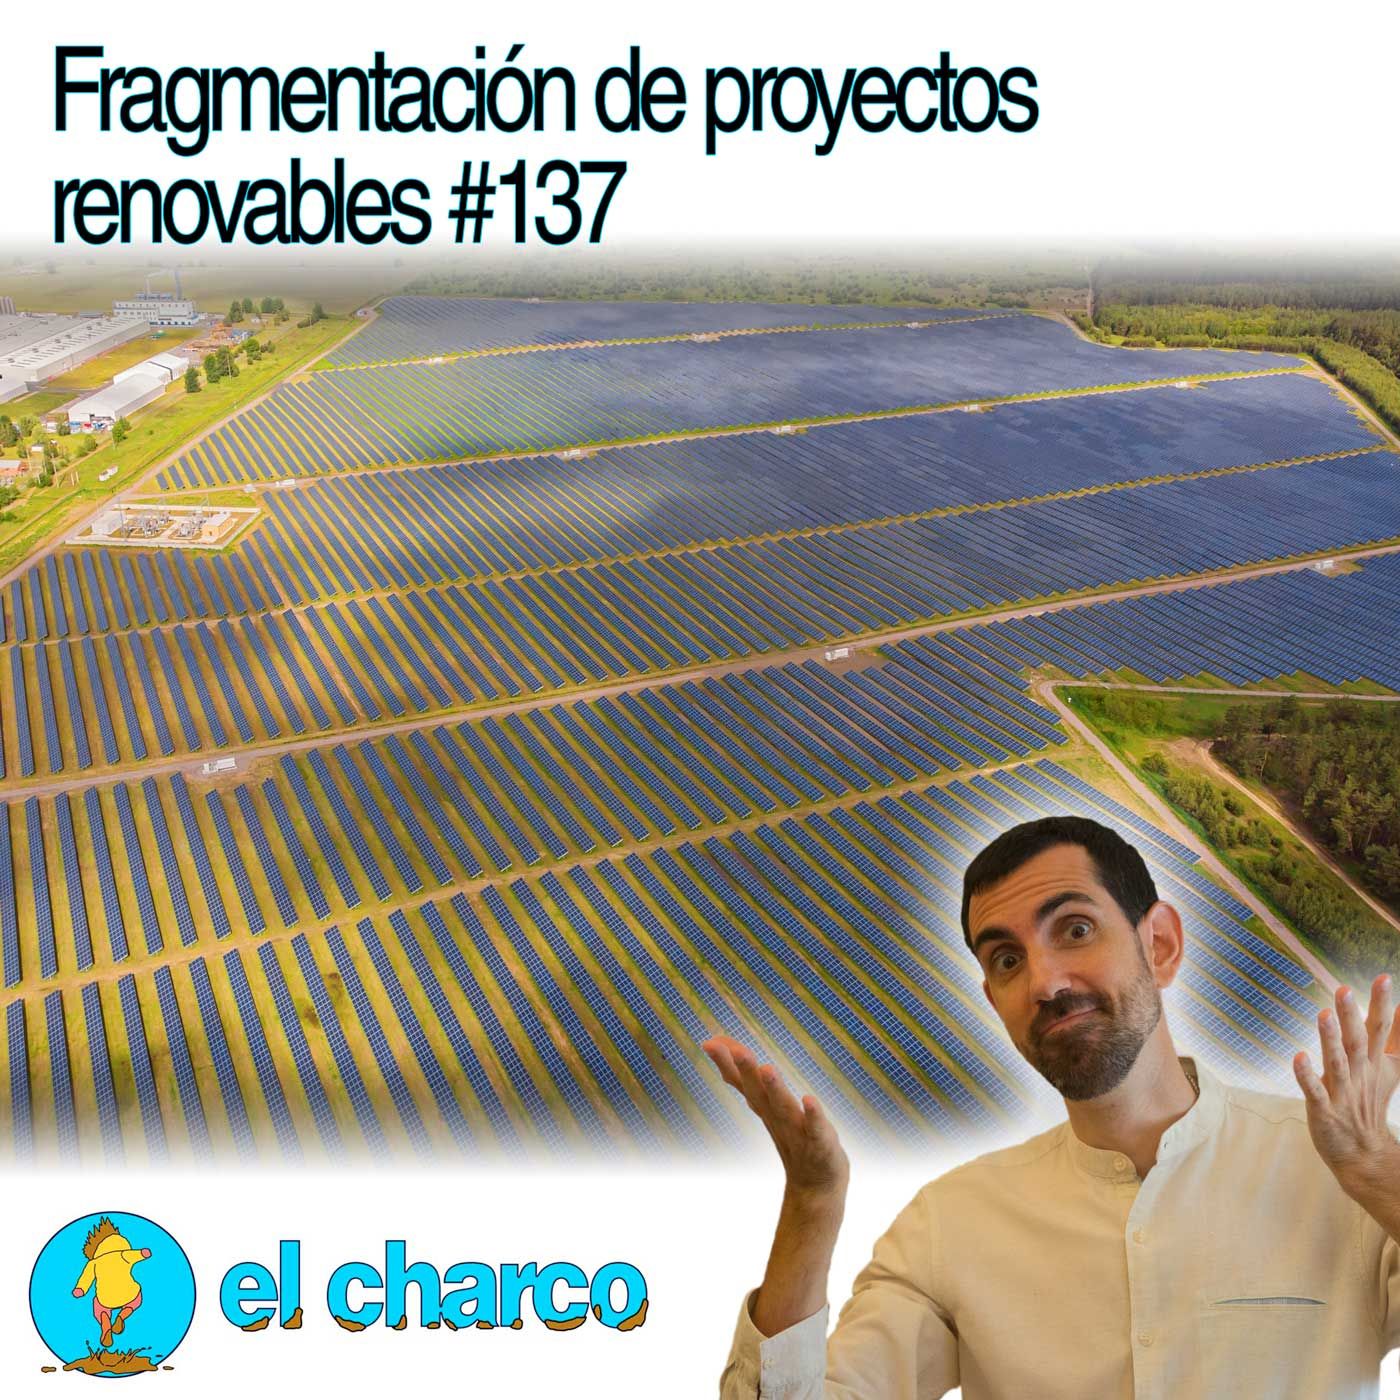 Fragmentación de proyectos renovables #137